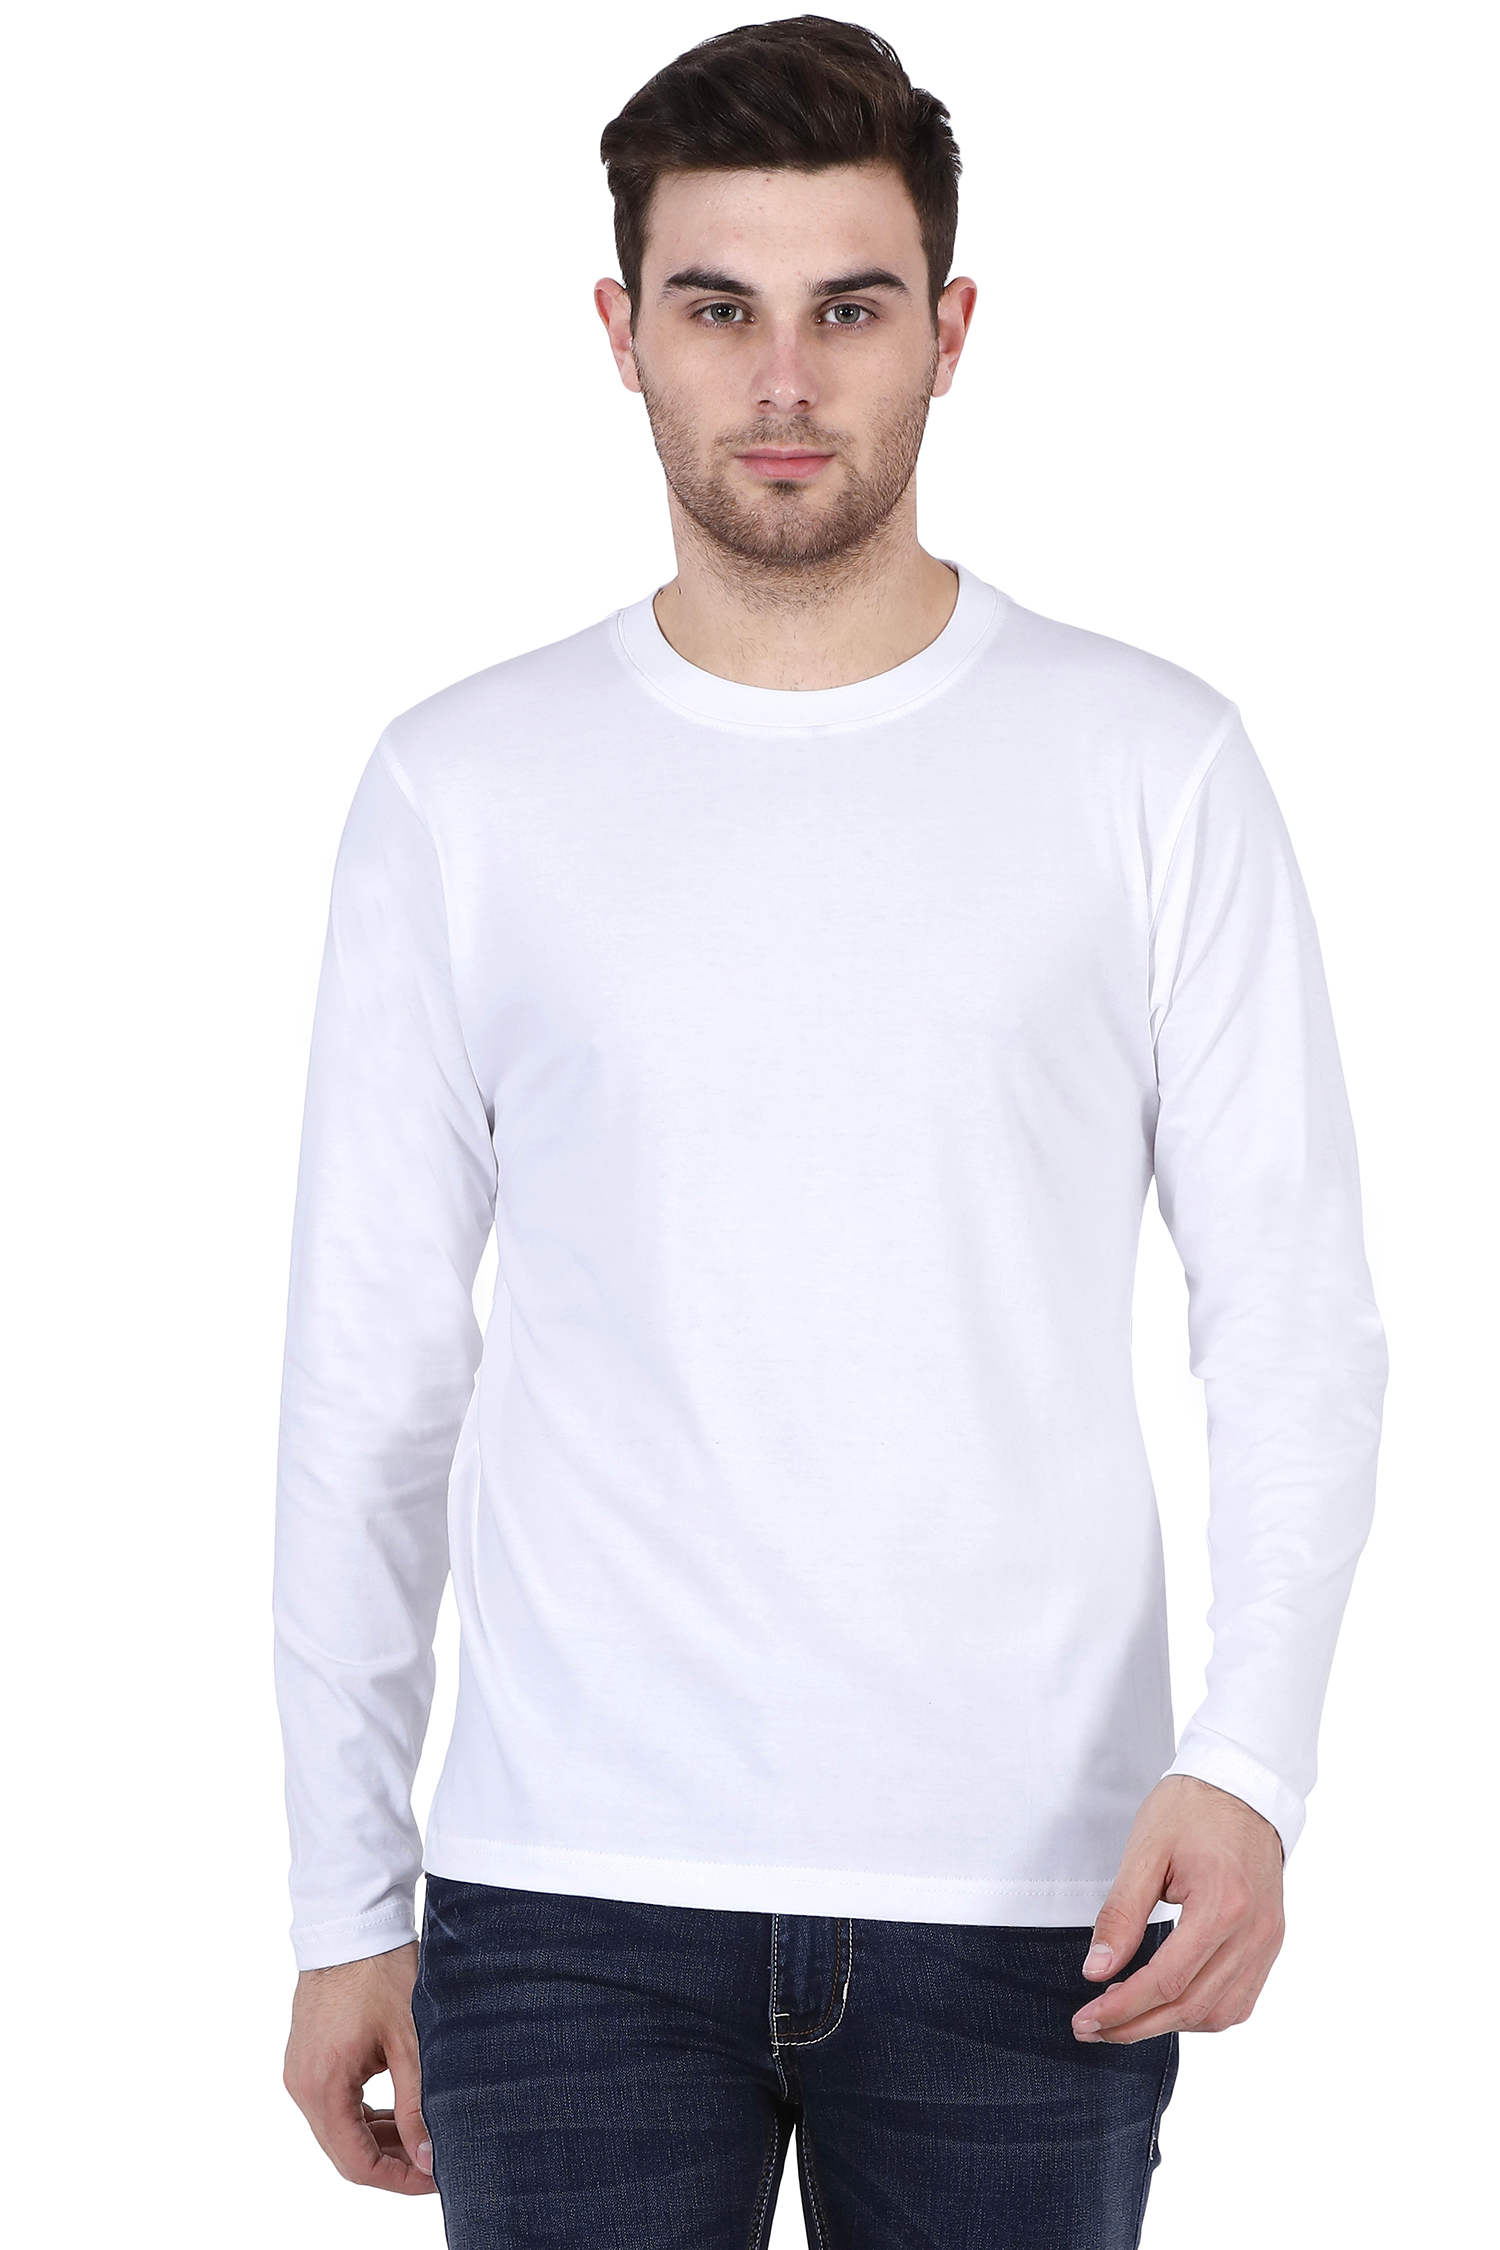 Plain White - Men Full Sleeve Round Neck T-Shirt - nautunkee.com